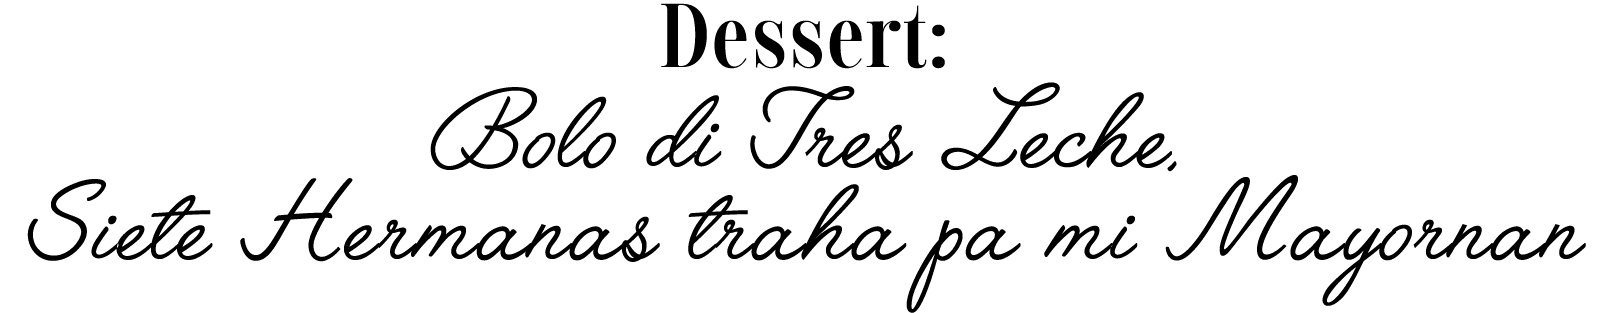 Dessert: Bolo di Tres Leche, Siete Hermanas traha pa mi Mayornan  